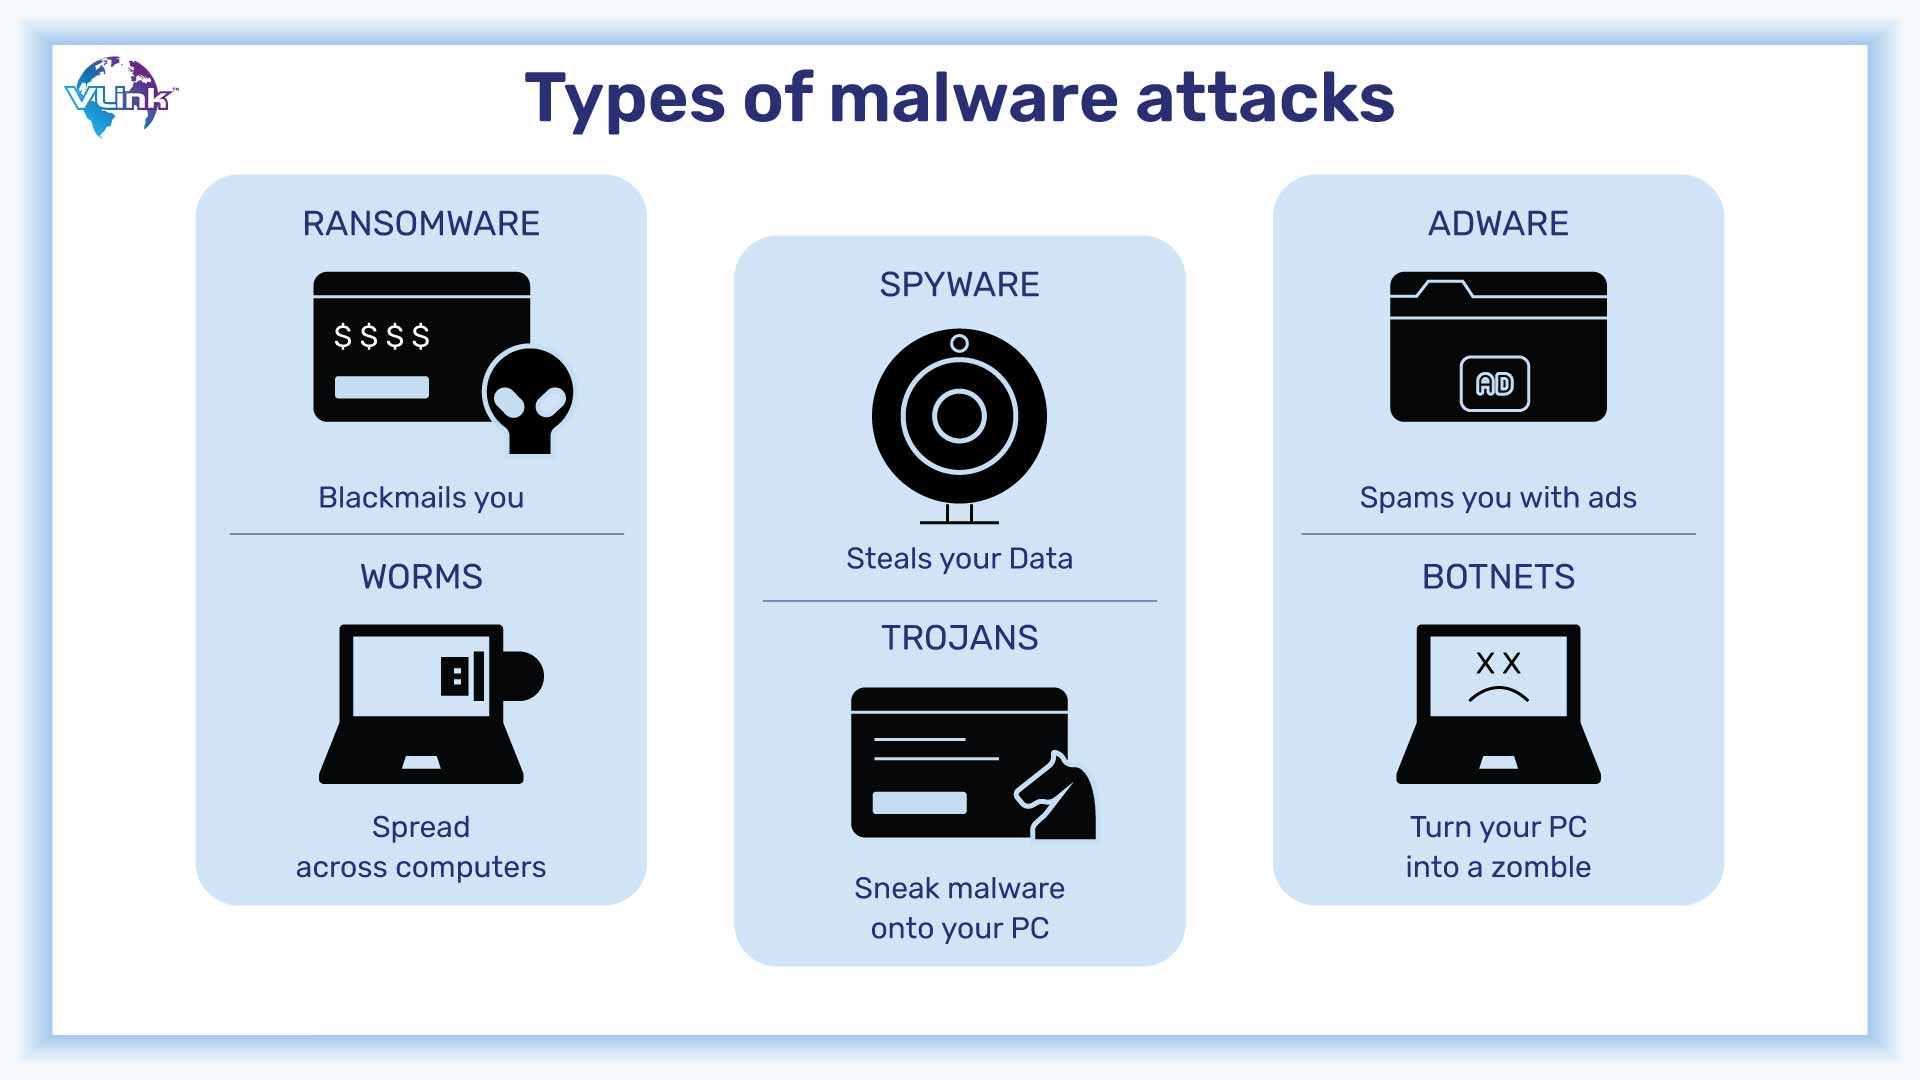 Types of malware attacks